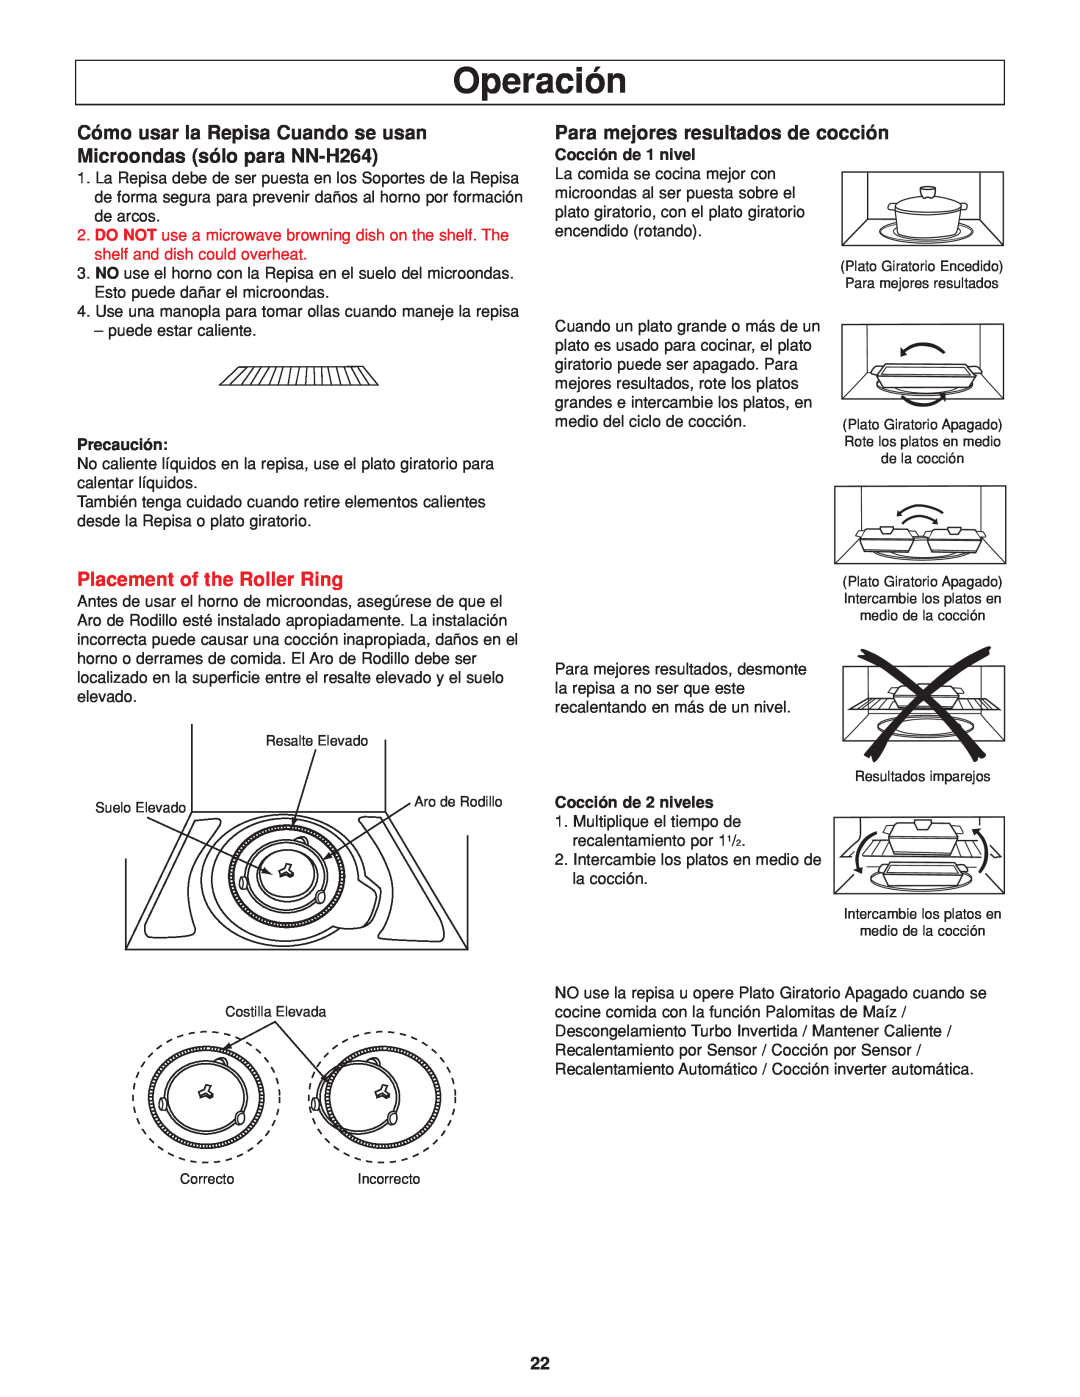 Panasonic NN-H264 important safety instructions Operación, Para mejores resultados de cocción, Placement of the Roller Ring 